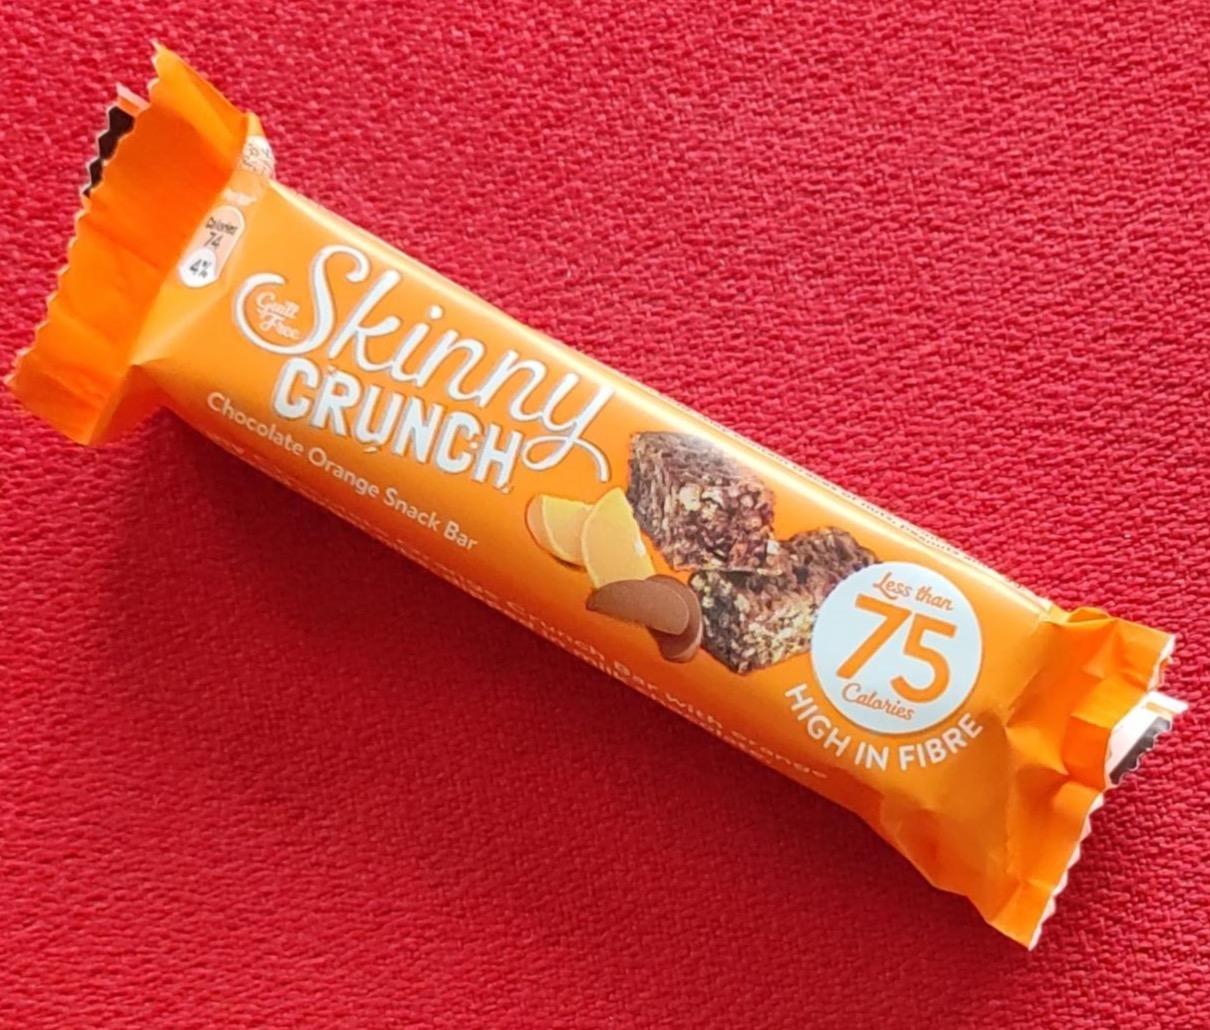 Képek - Skinny crunch Chocolate Orange Snack Bar